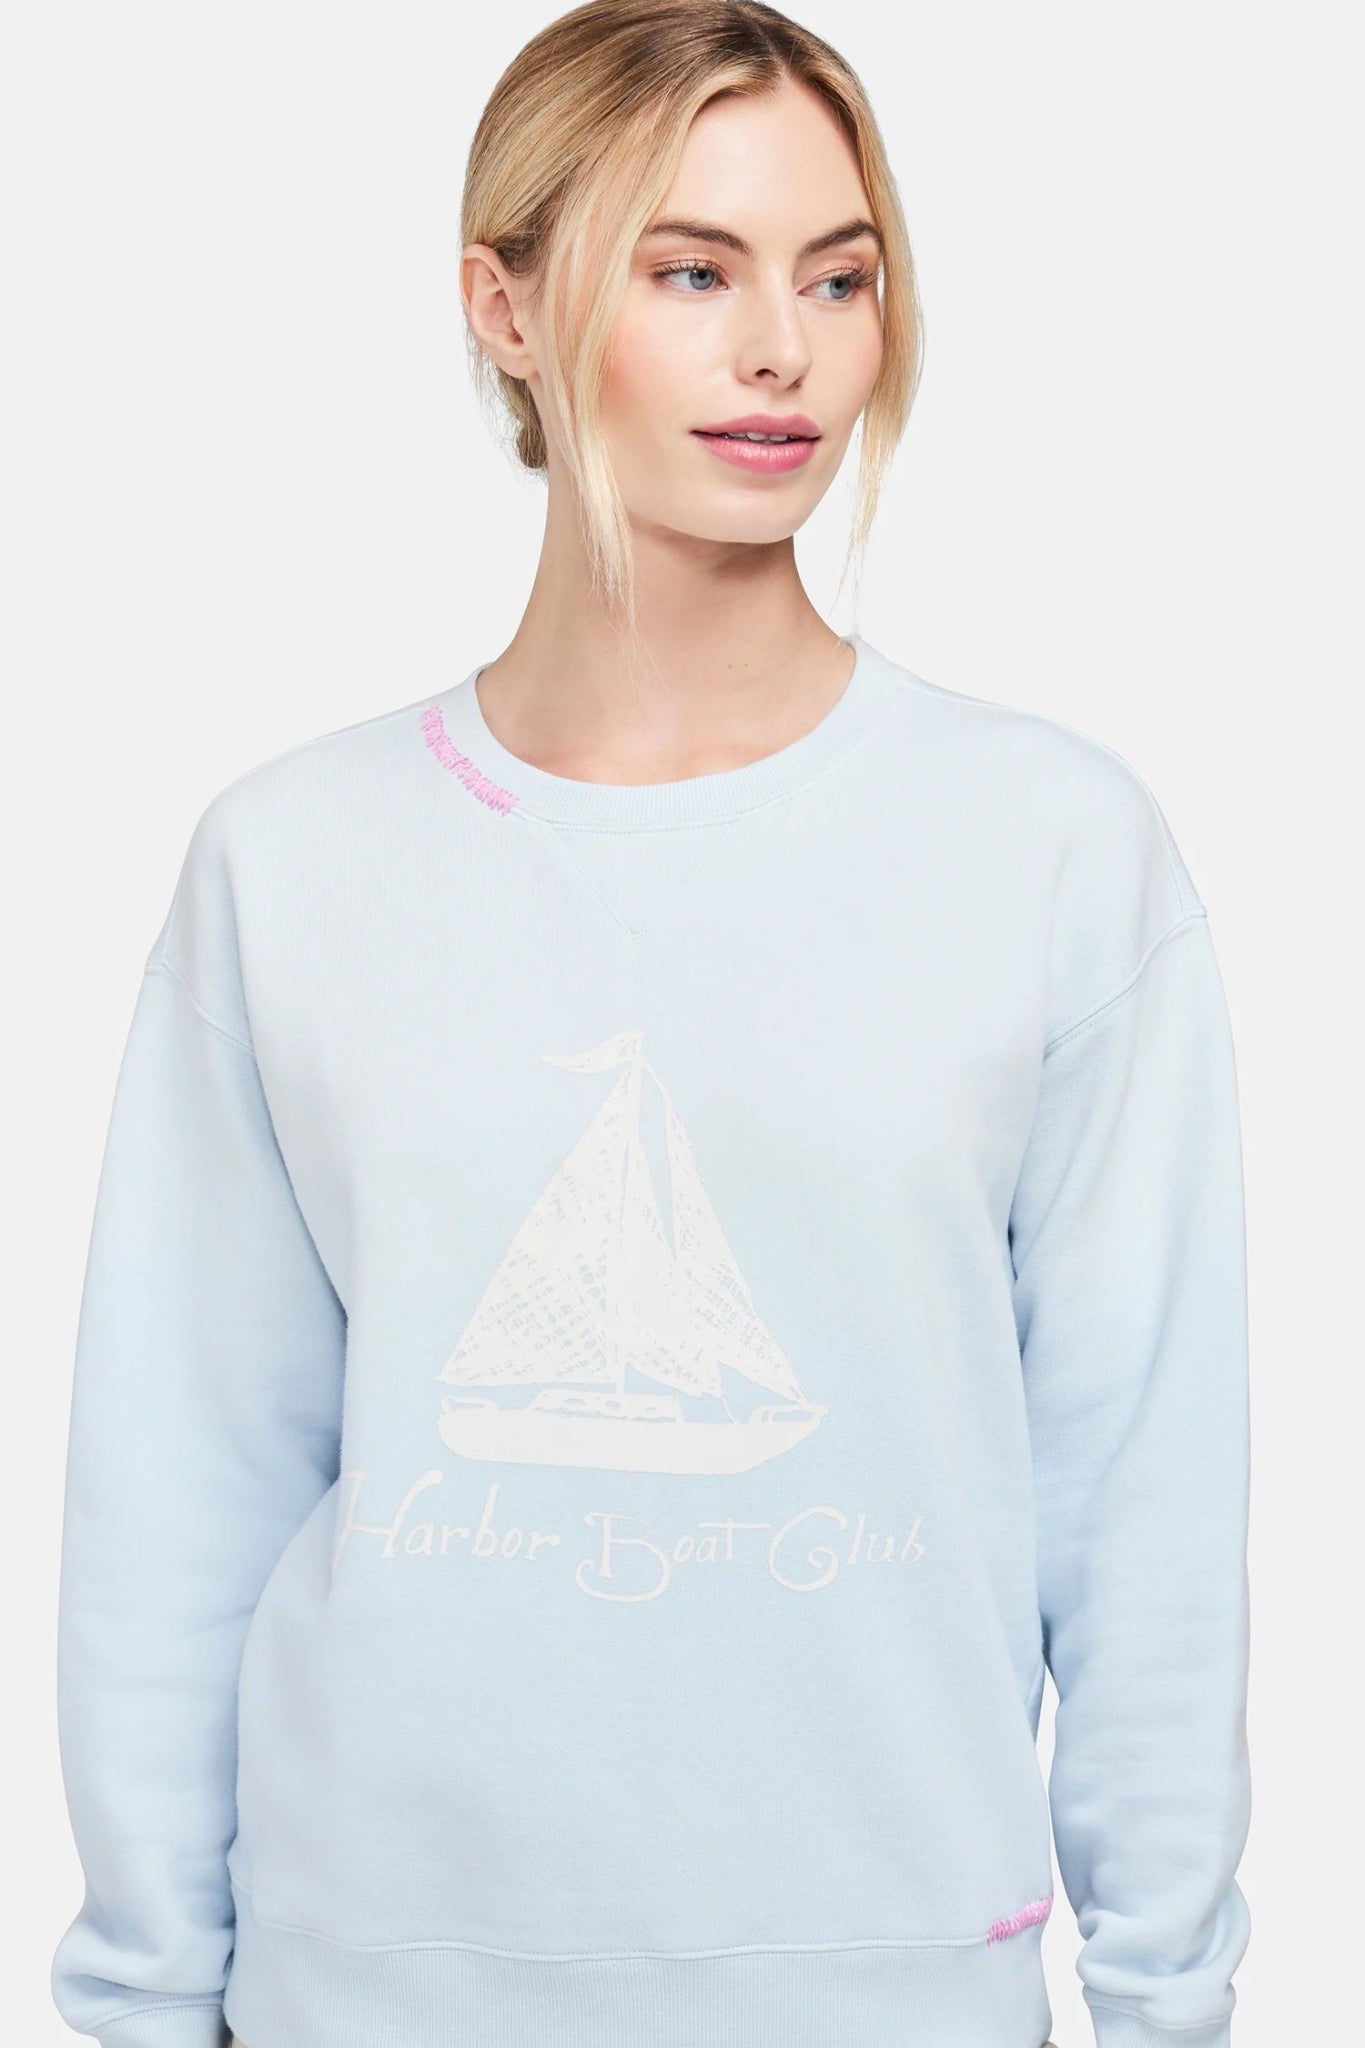 Shop Wildfox Harbor Boat Club Cody Sweatshirt - Premium Jumper from Wildfox Online now at Spoiled Brat 